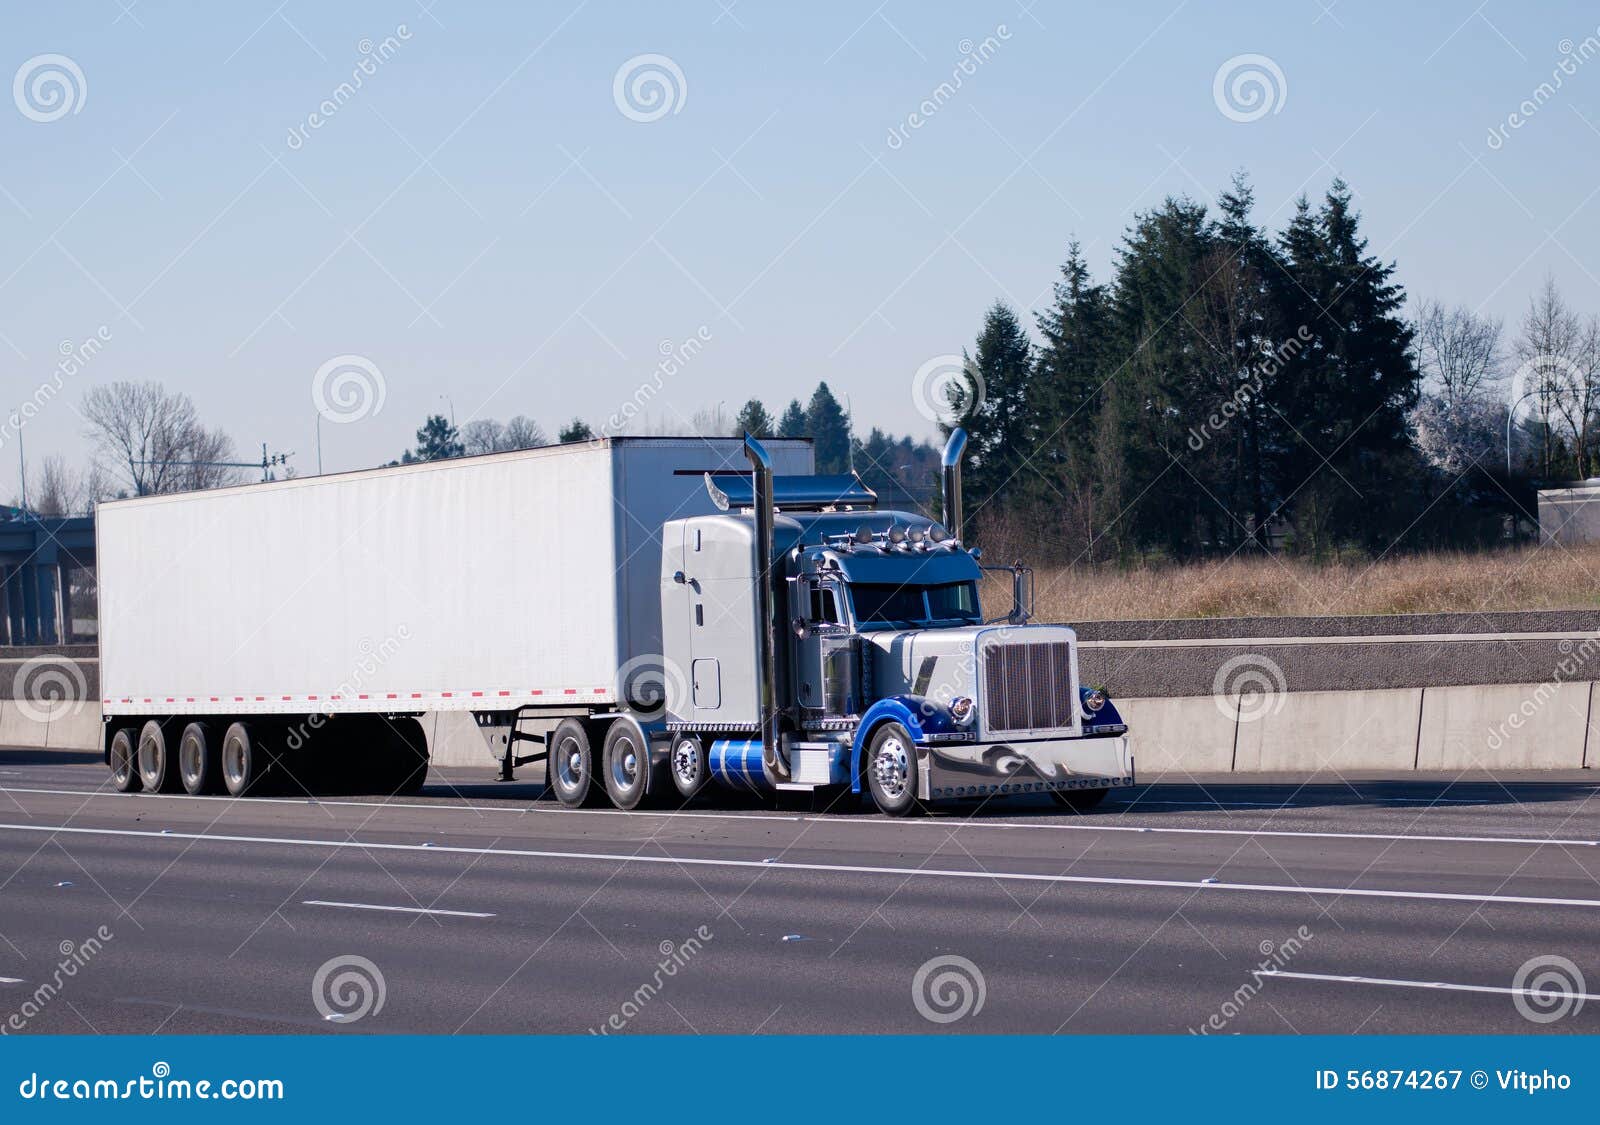 Fancy Classic Chromy Bright Blue Shiny Semi Truck Big Rig Stock Photo - Image: 56874267